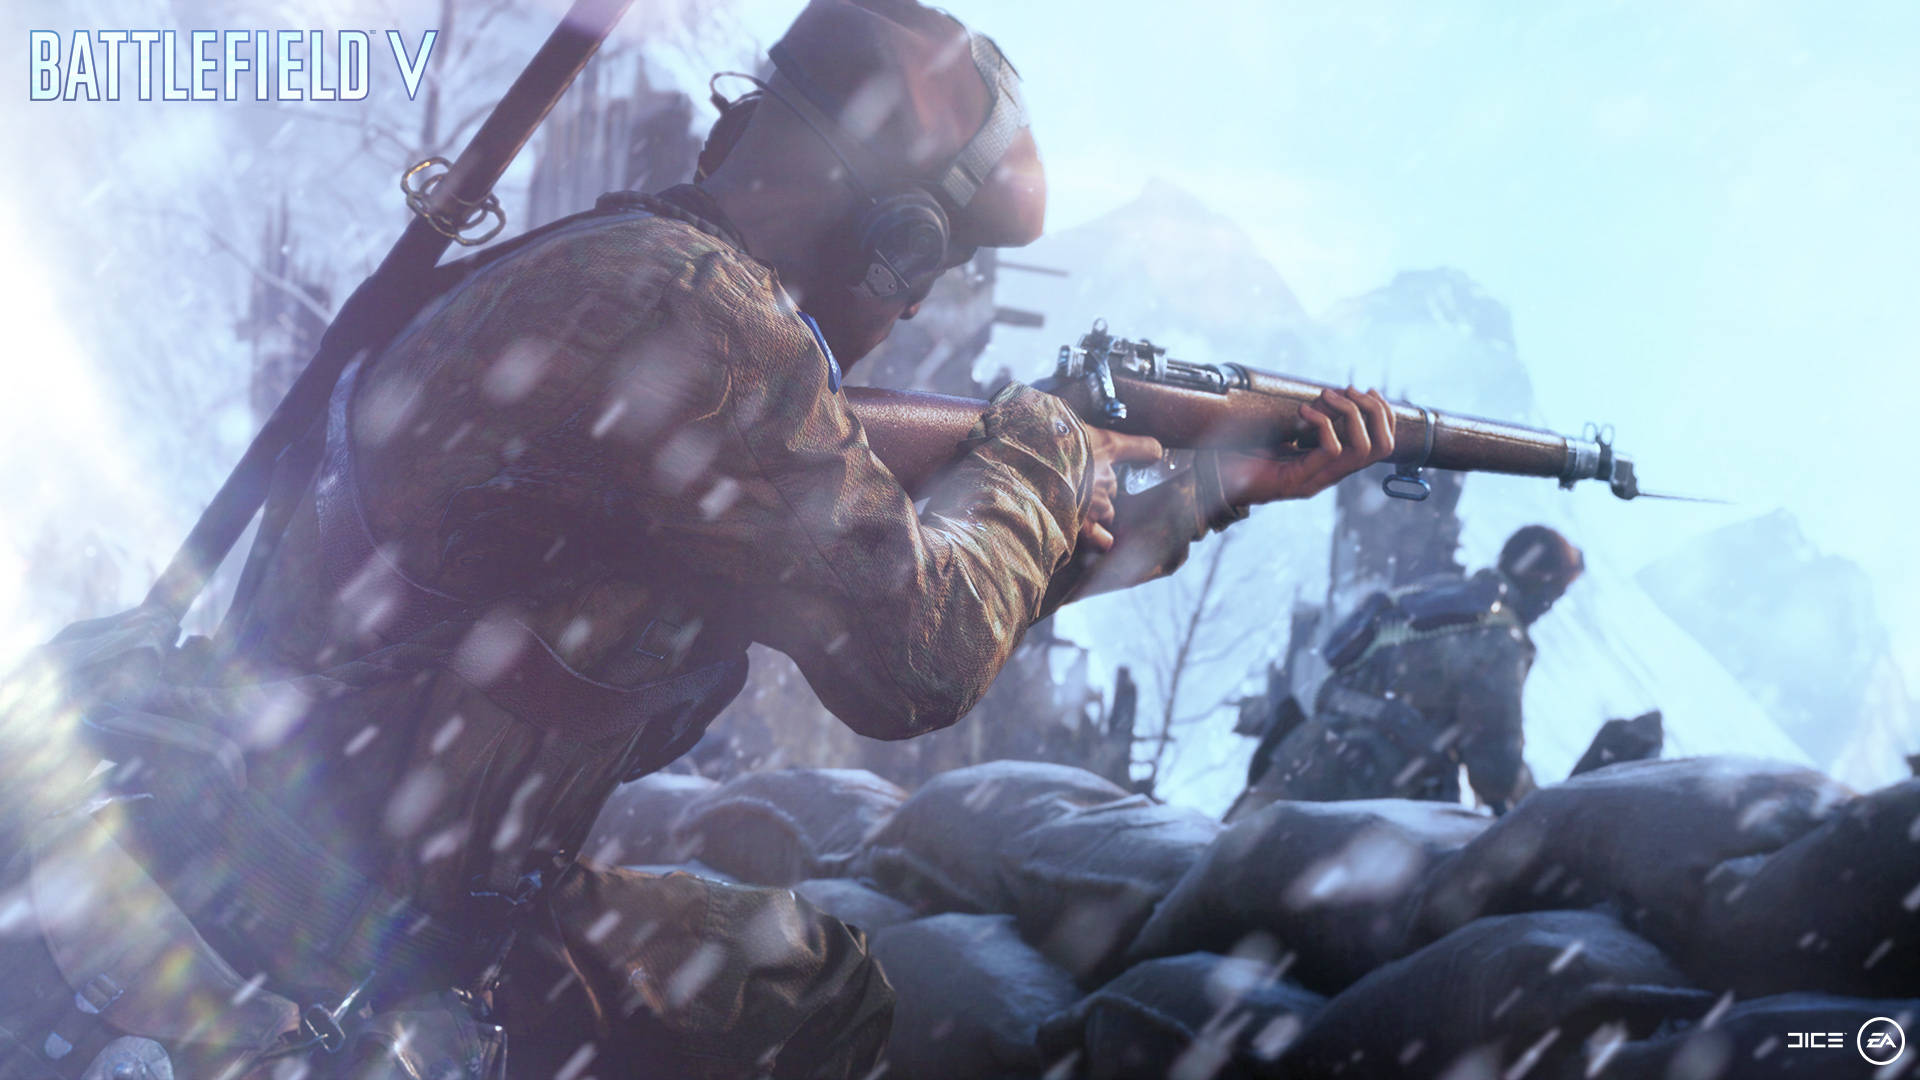 Battlefield 5 Soldiers In Snow